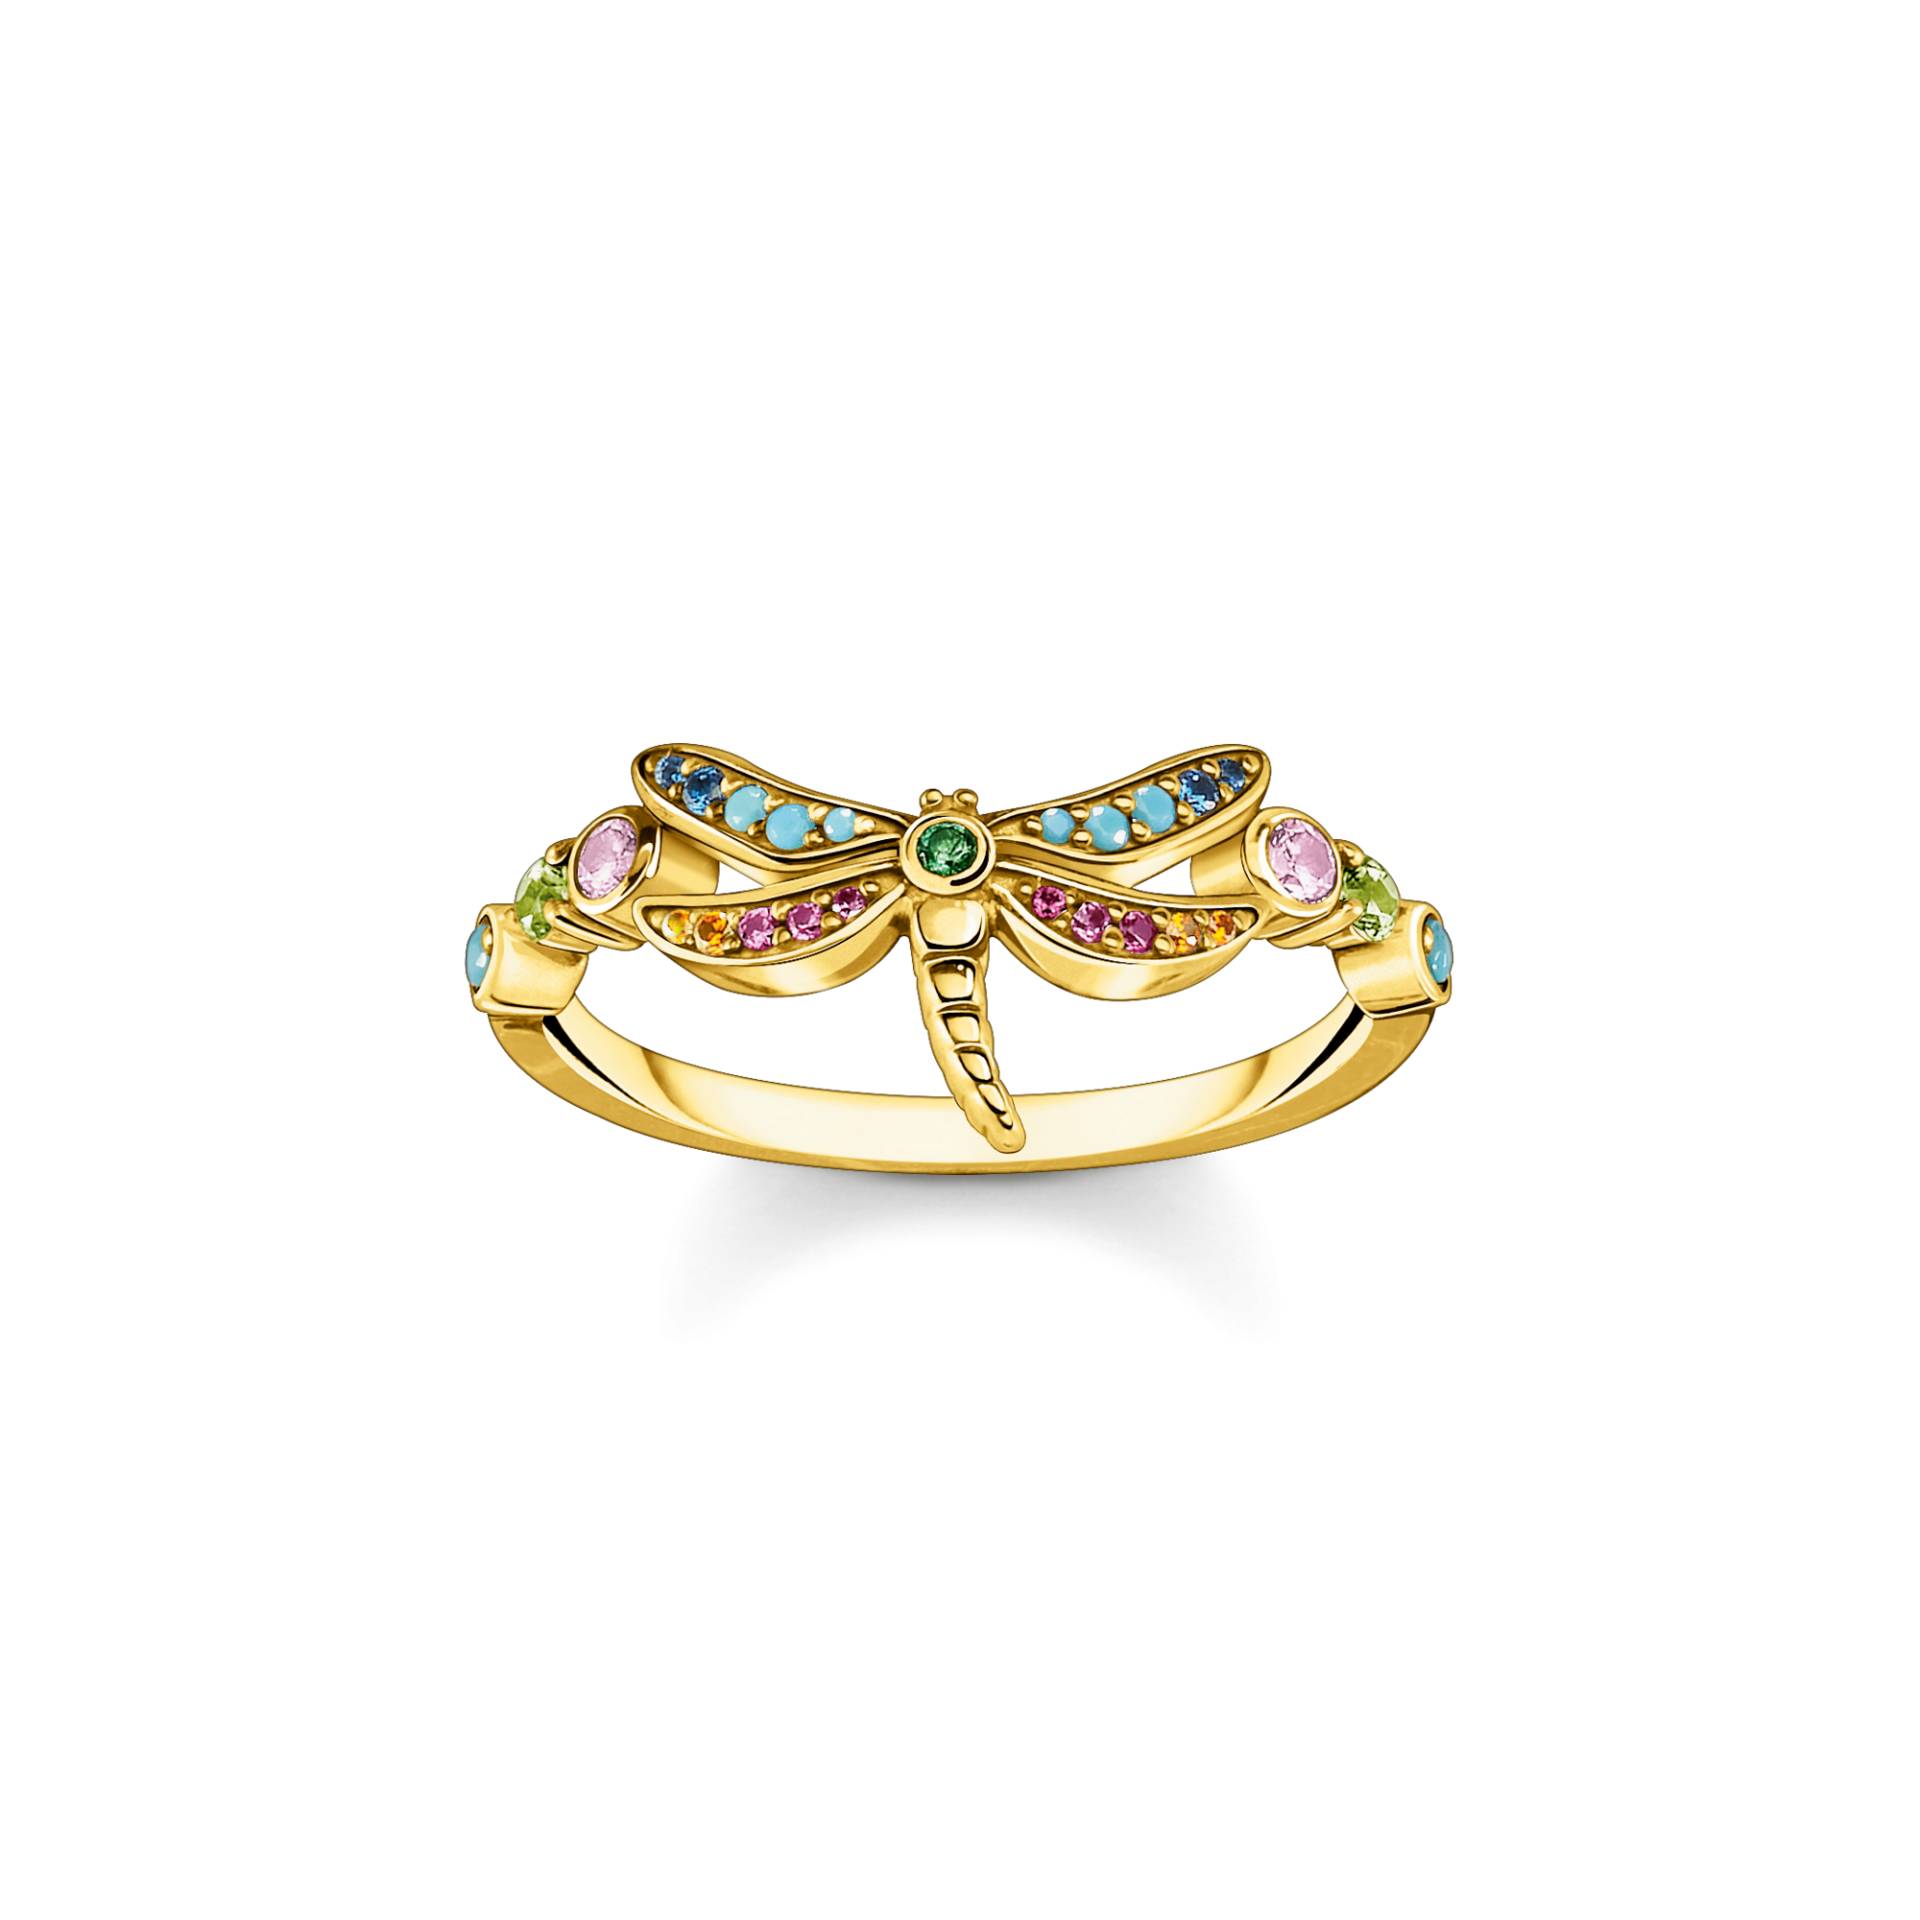 Thomas Sabo Ring Libelle mit bunten Steinen gold mehrfarbig TR2383-315-7-48 von Thomas Sabo